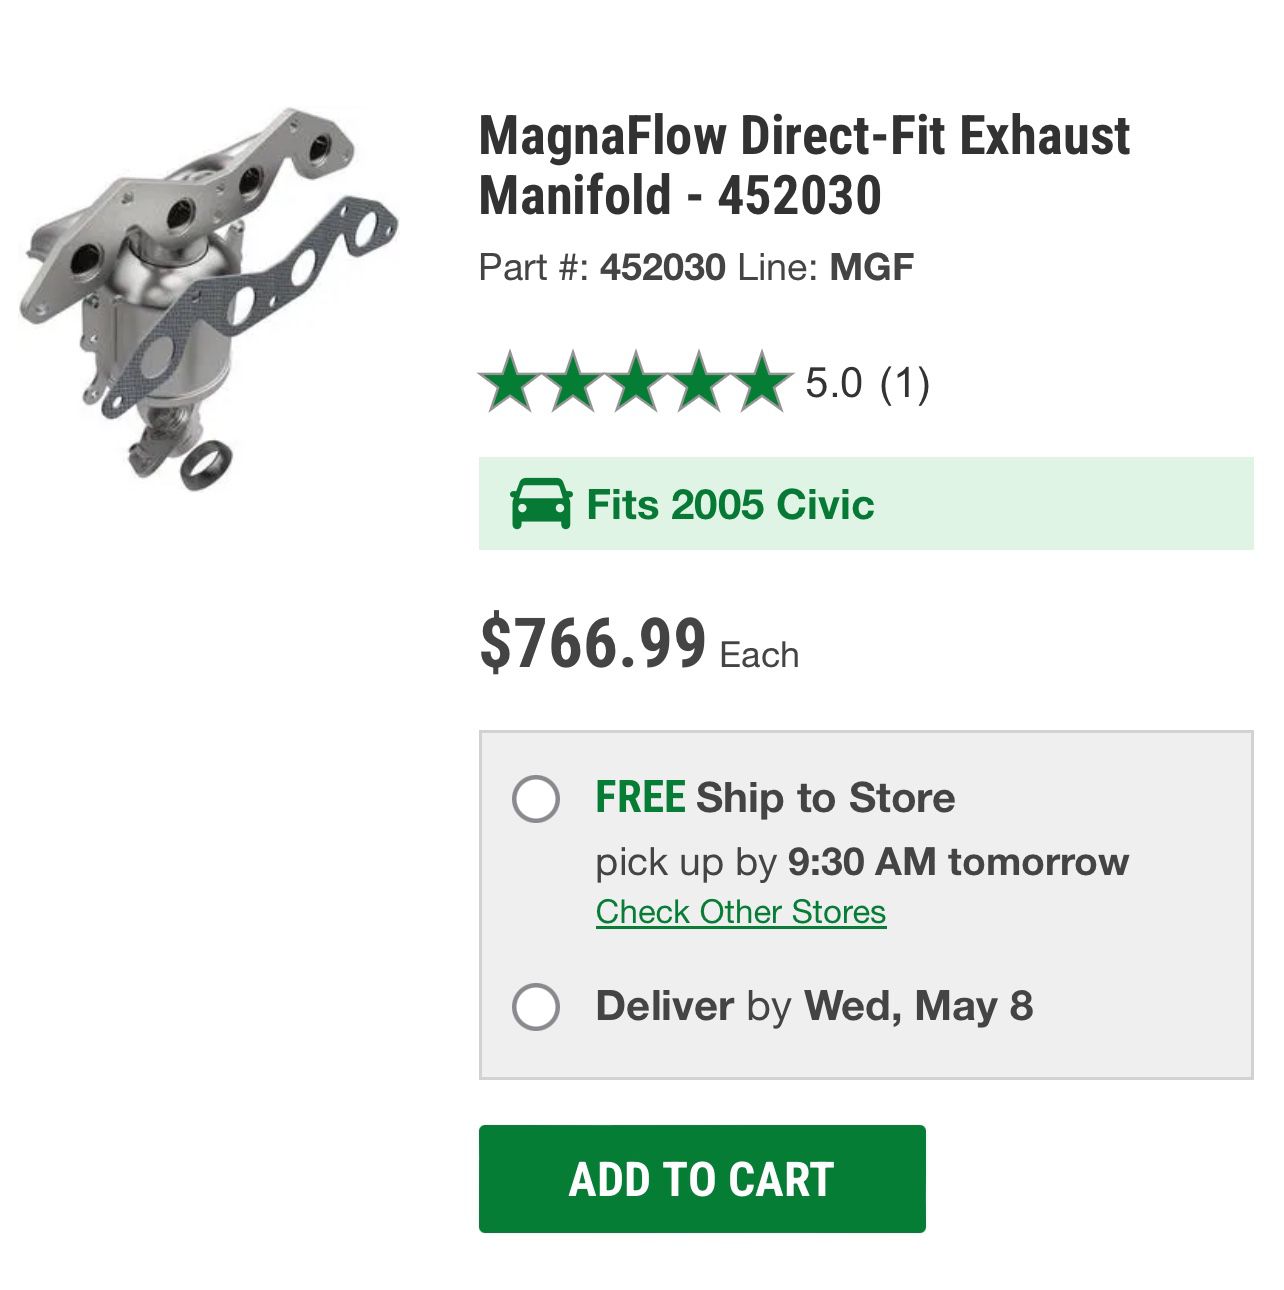 MagnaFlow Direct-Fit Exhaust Manifold